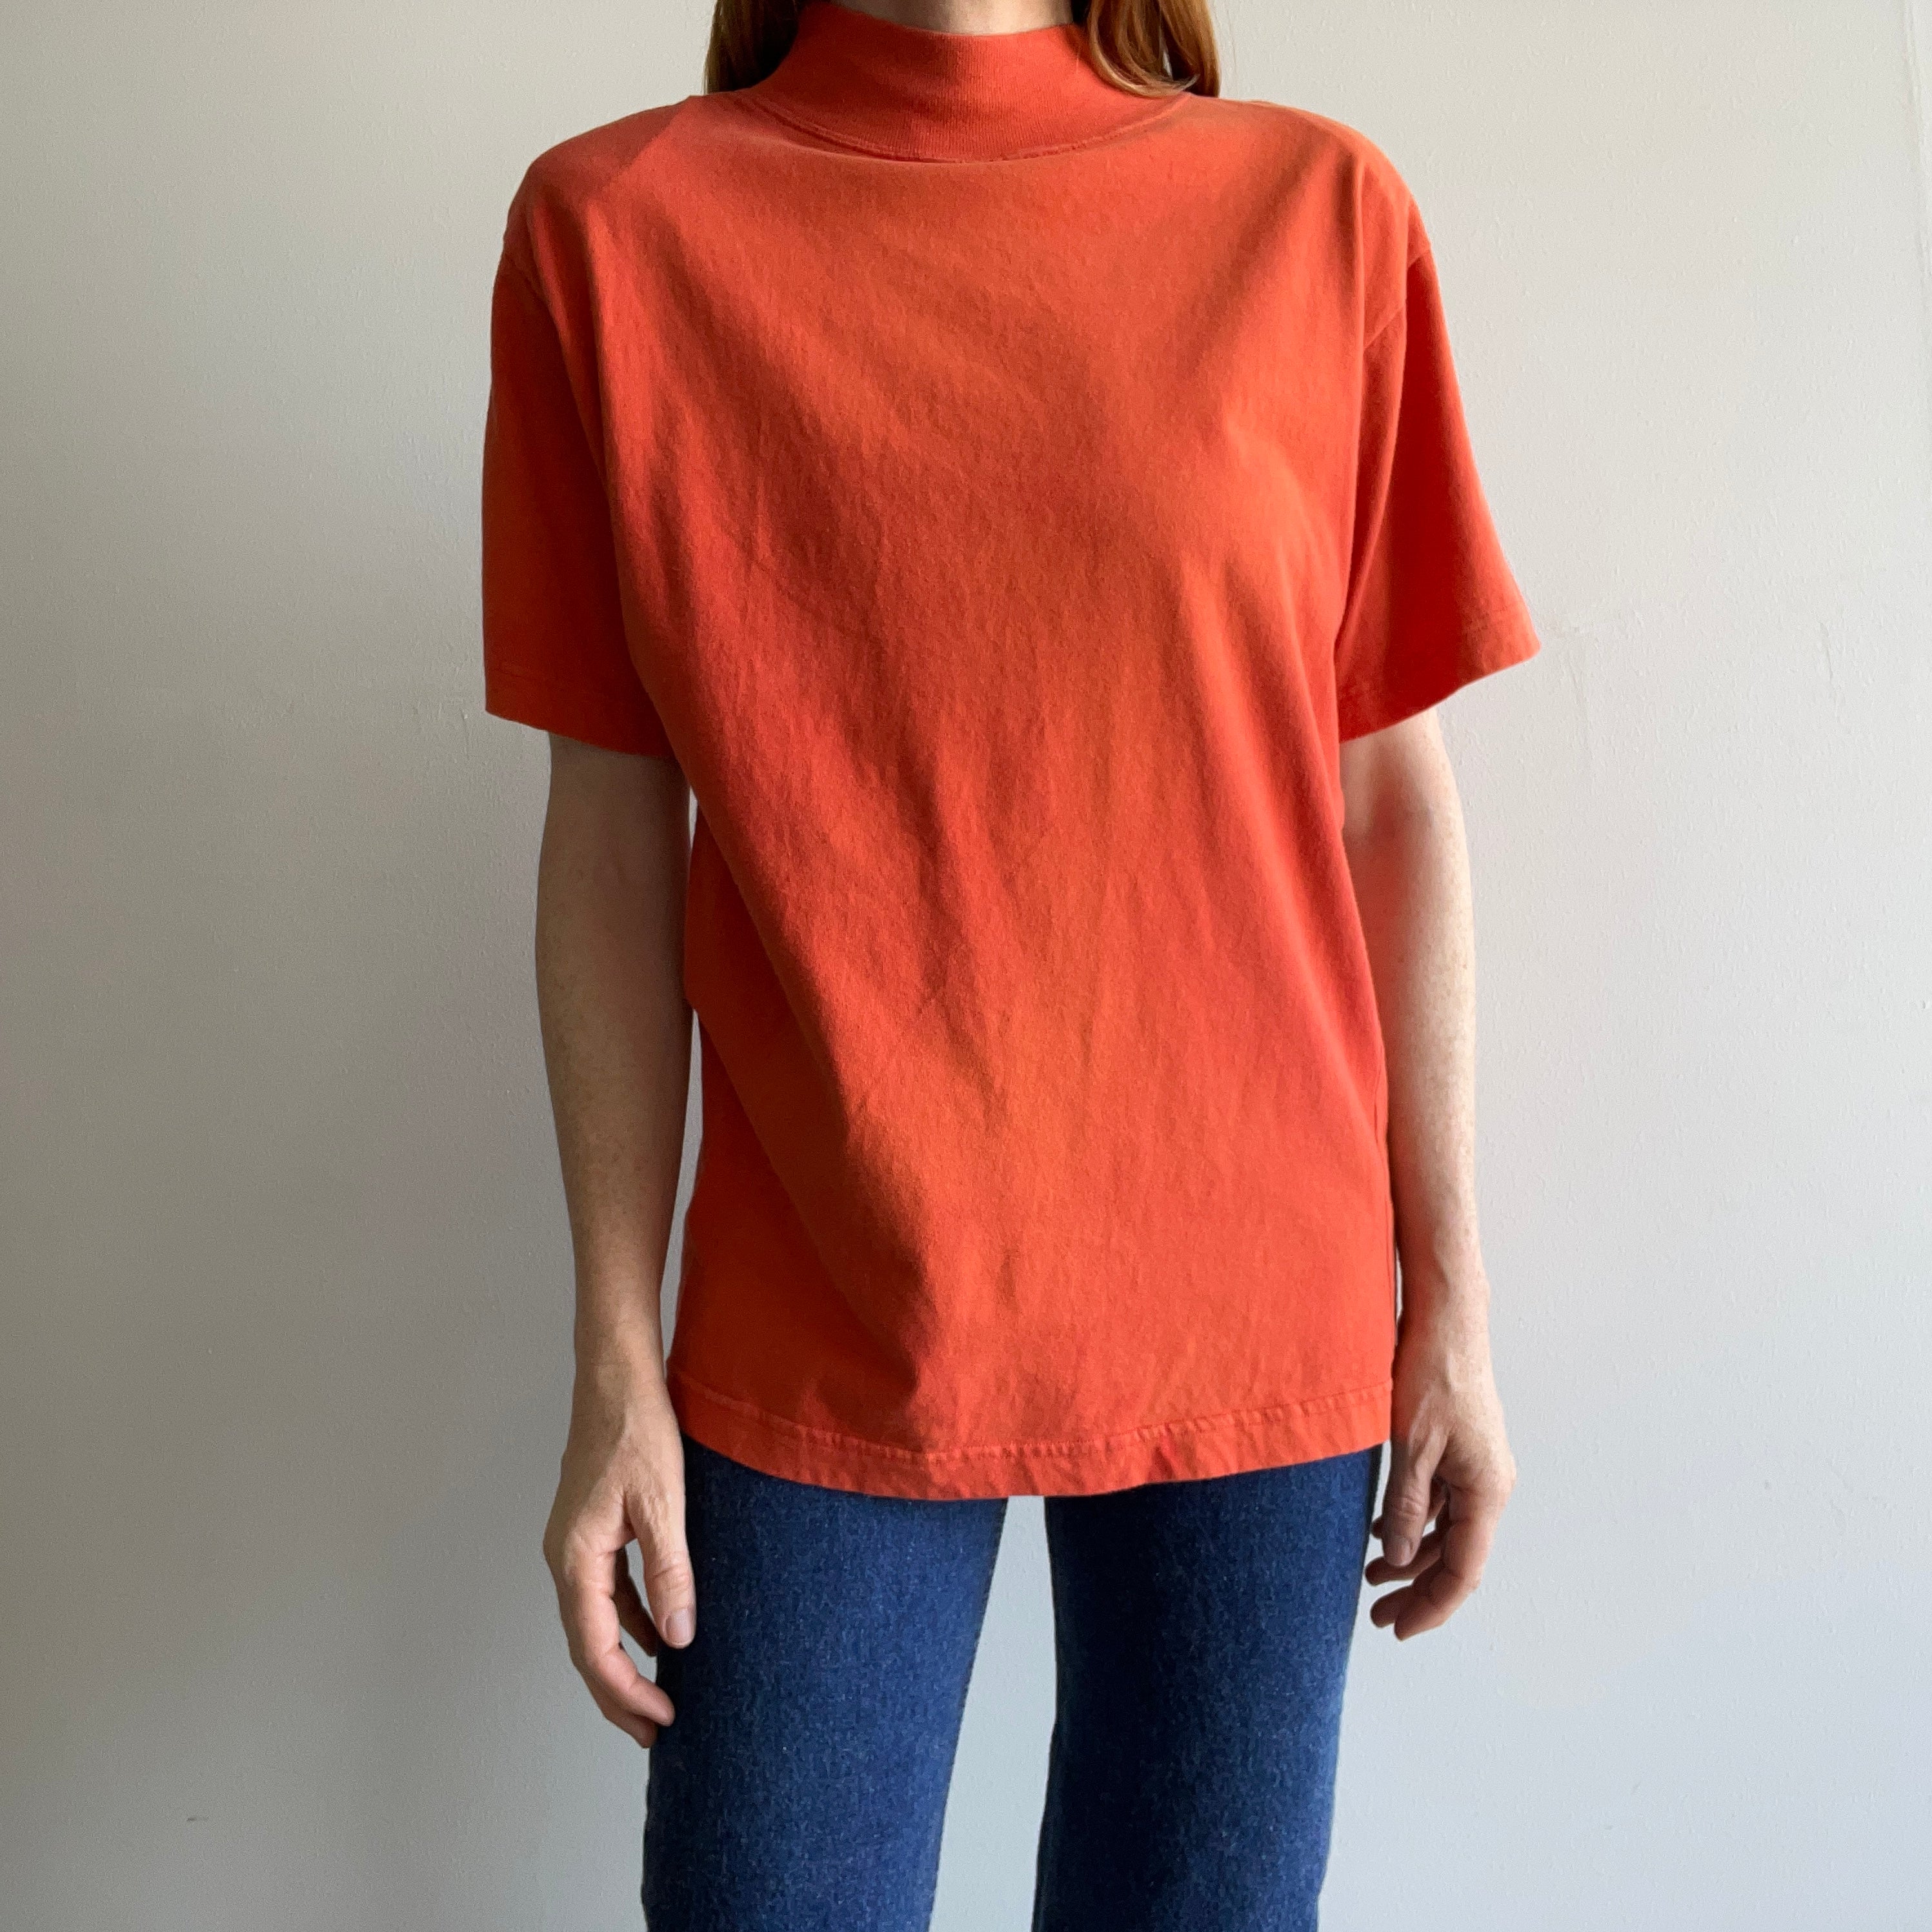 1980s Orange Cotton Mock Neck T-Shirt with... SHoulder Pads!